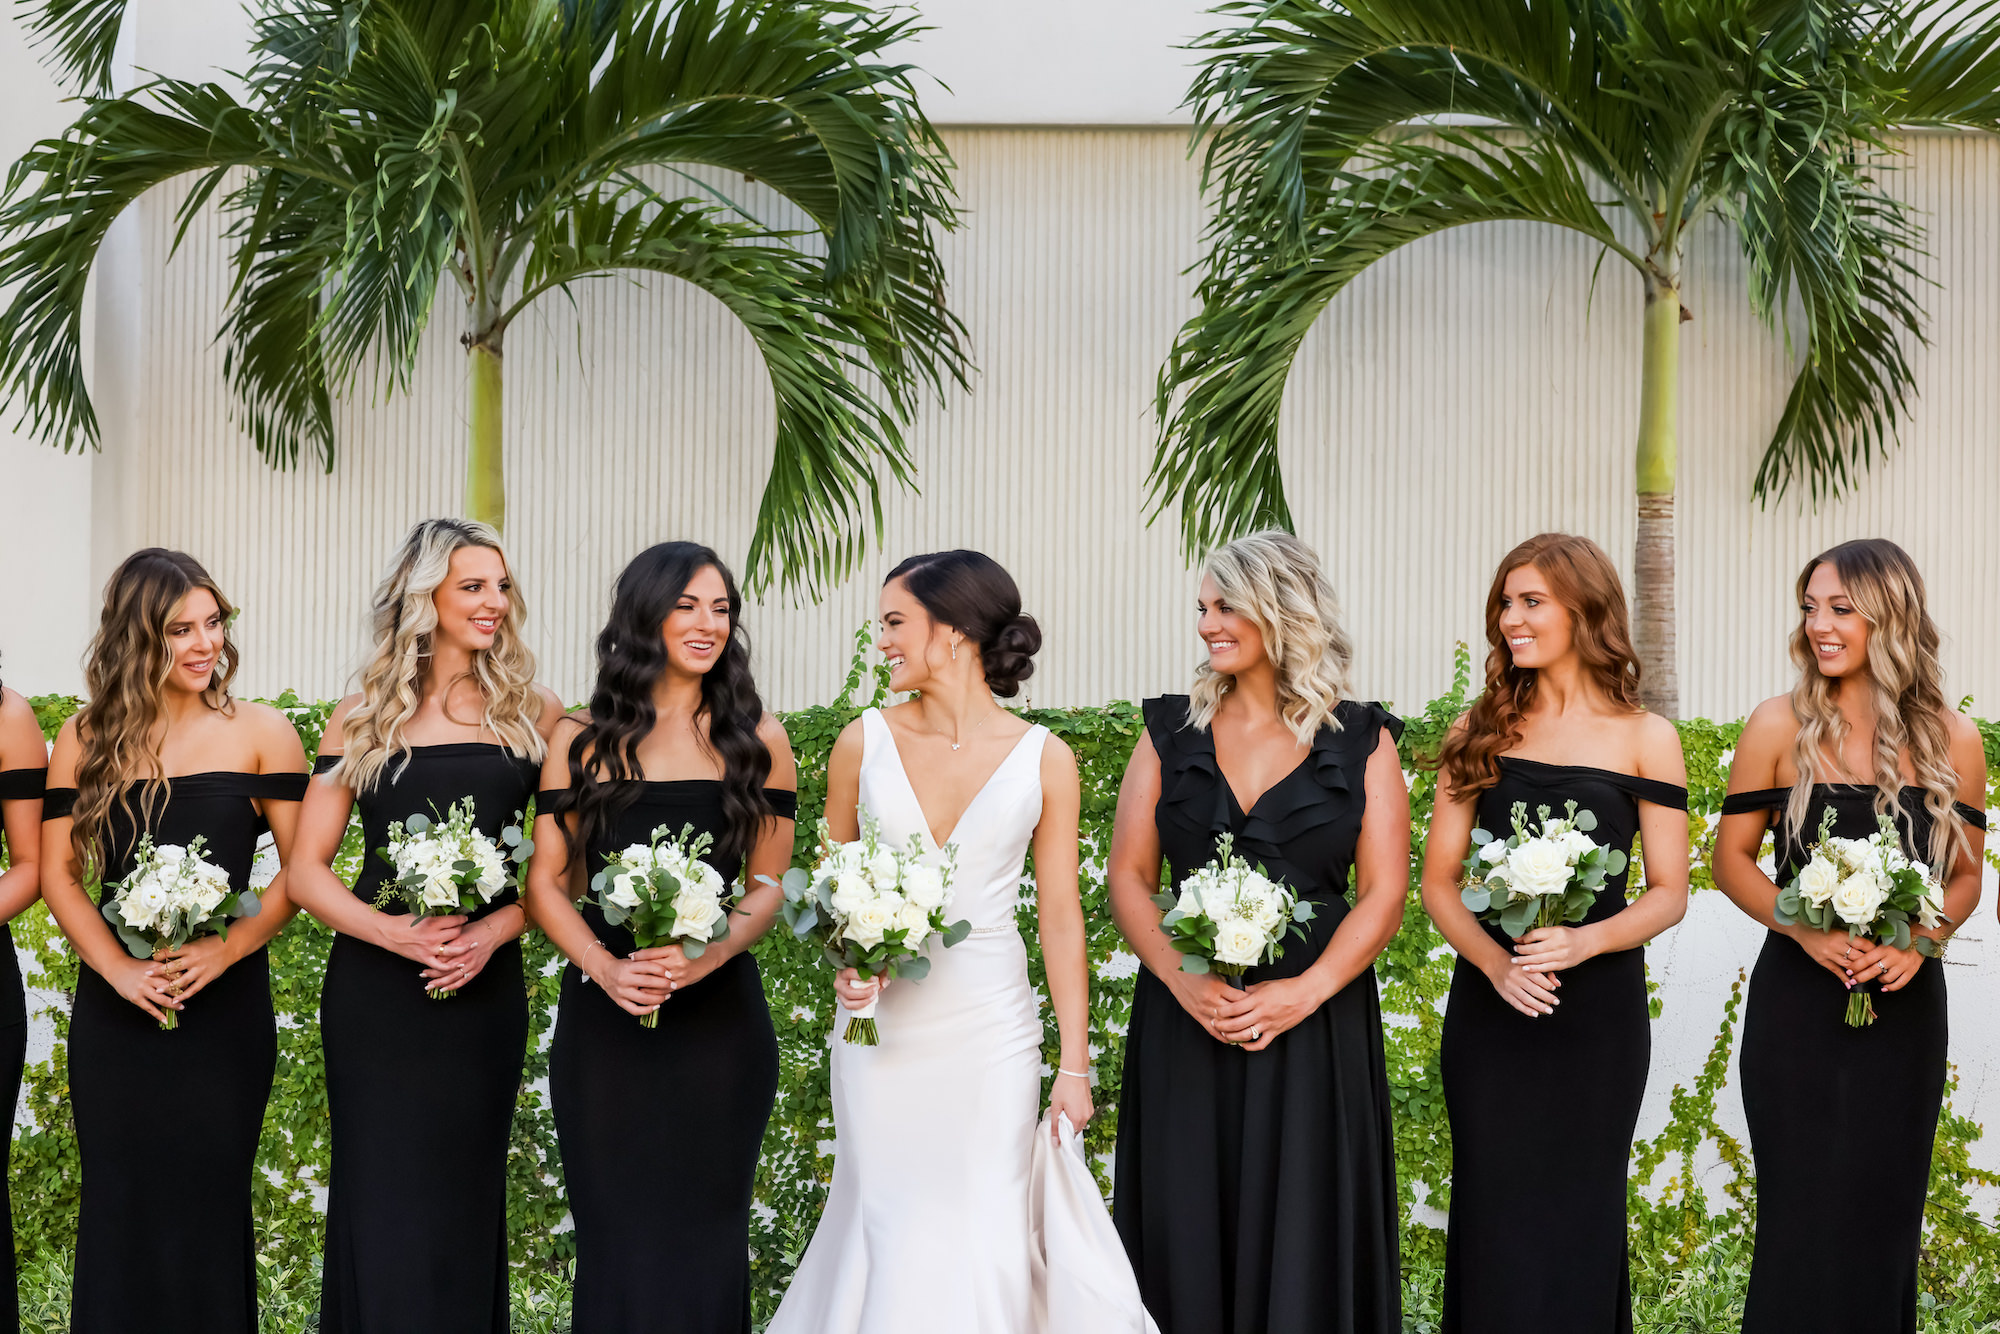 Bride and Bridesmaids in Black Floor Length Dresses Wedding Portrait Inspiration | St. Pete Wedding Photographer Lifelong Photography